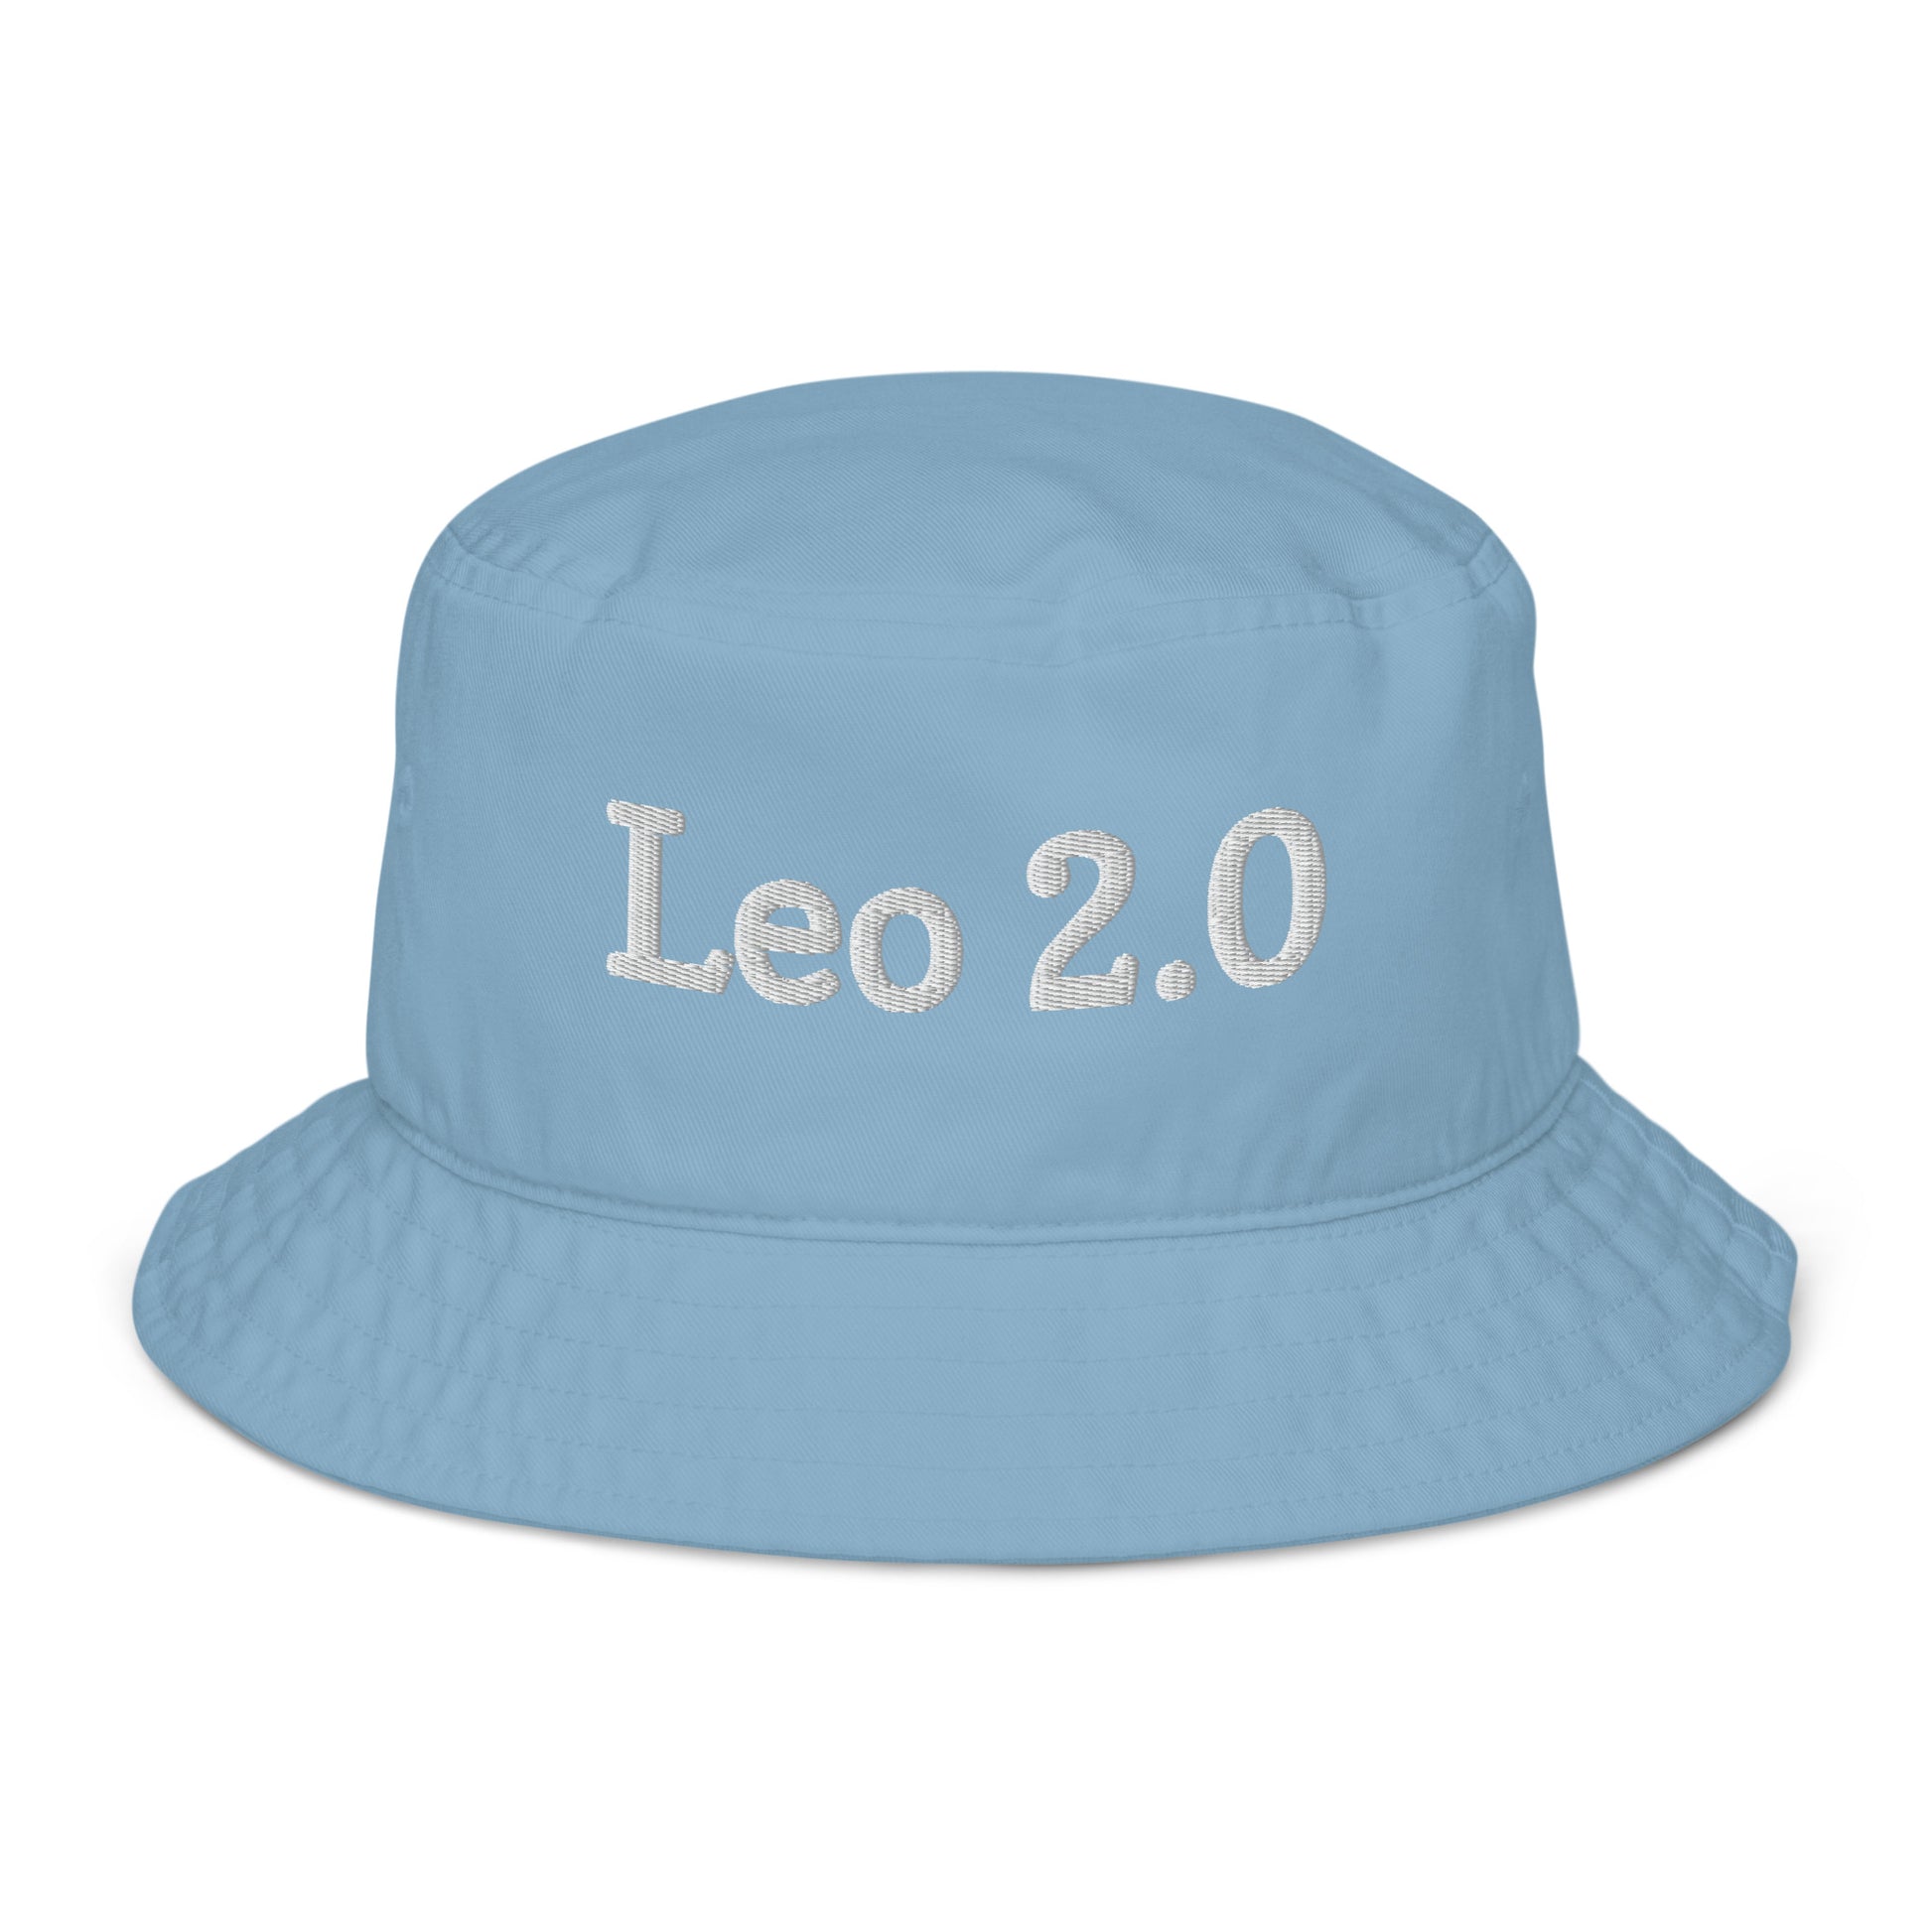 Leo 2.0 hat / Leo 2.0 Organic bucket hat